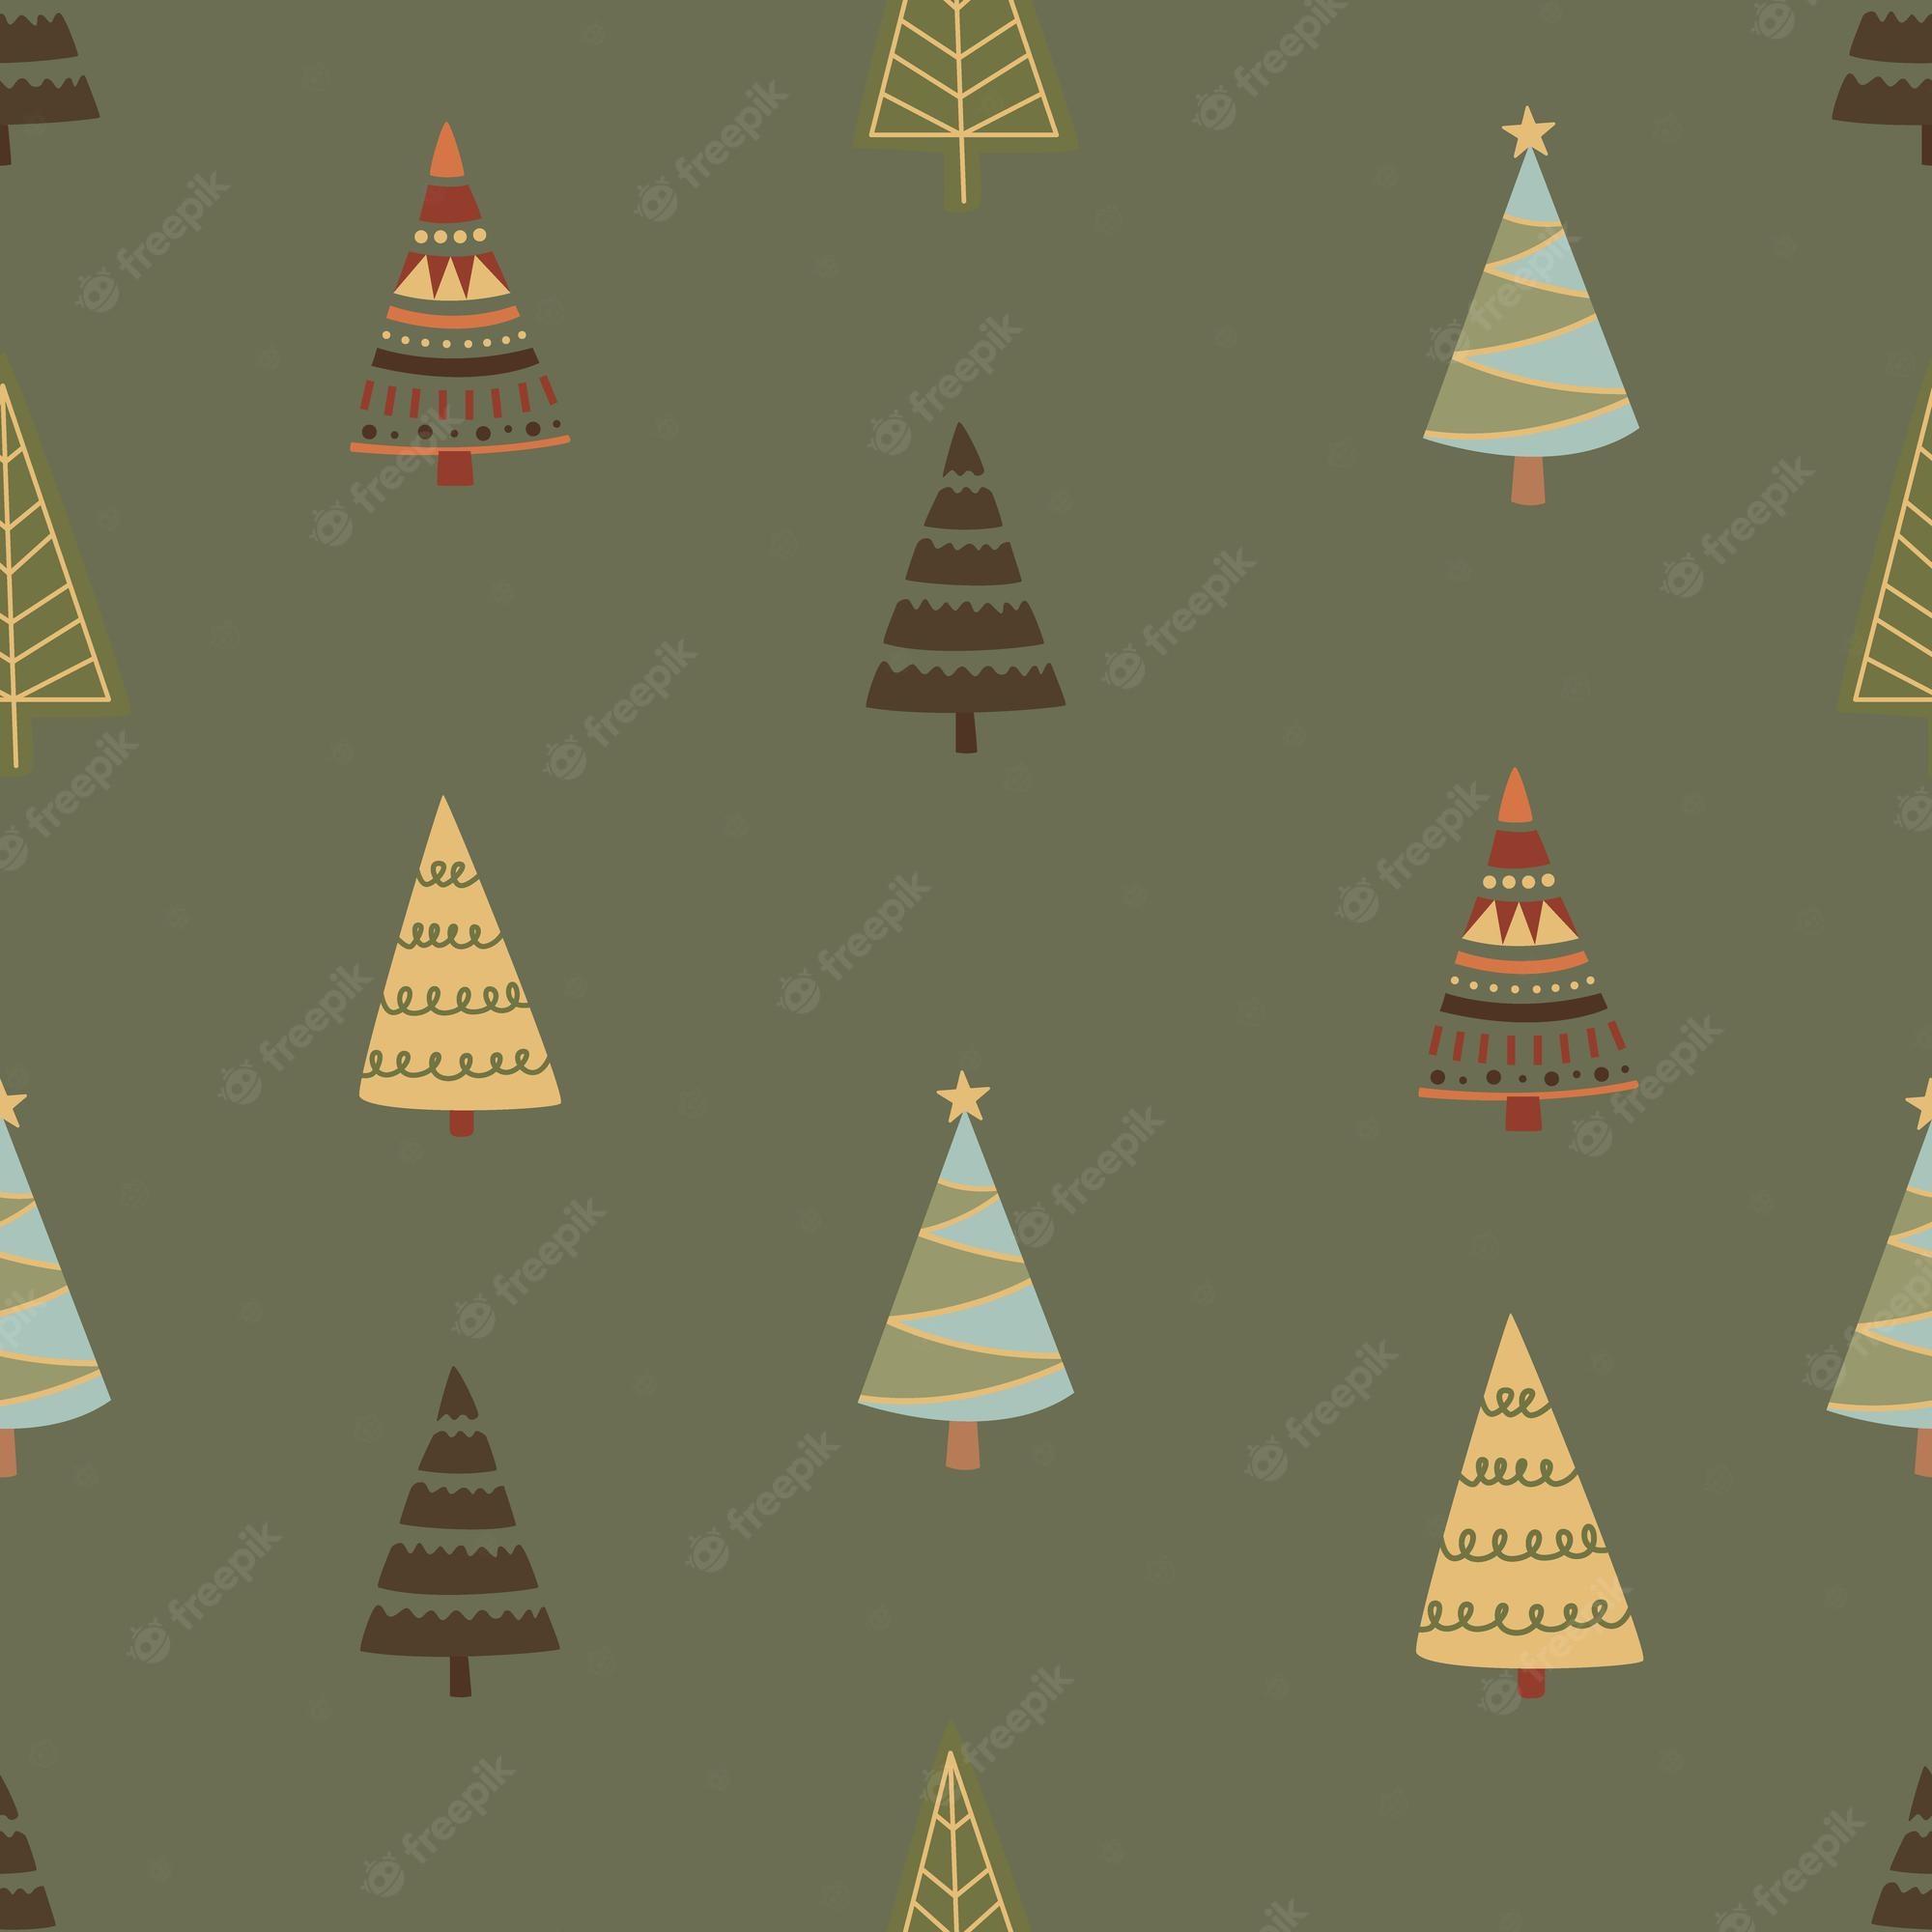 Christmas Aesthetic Tumblr Wallpapers